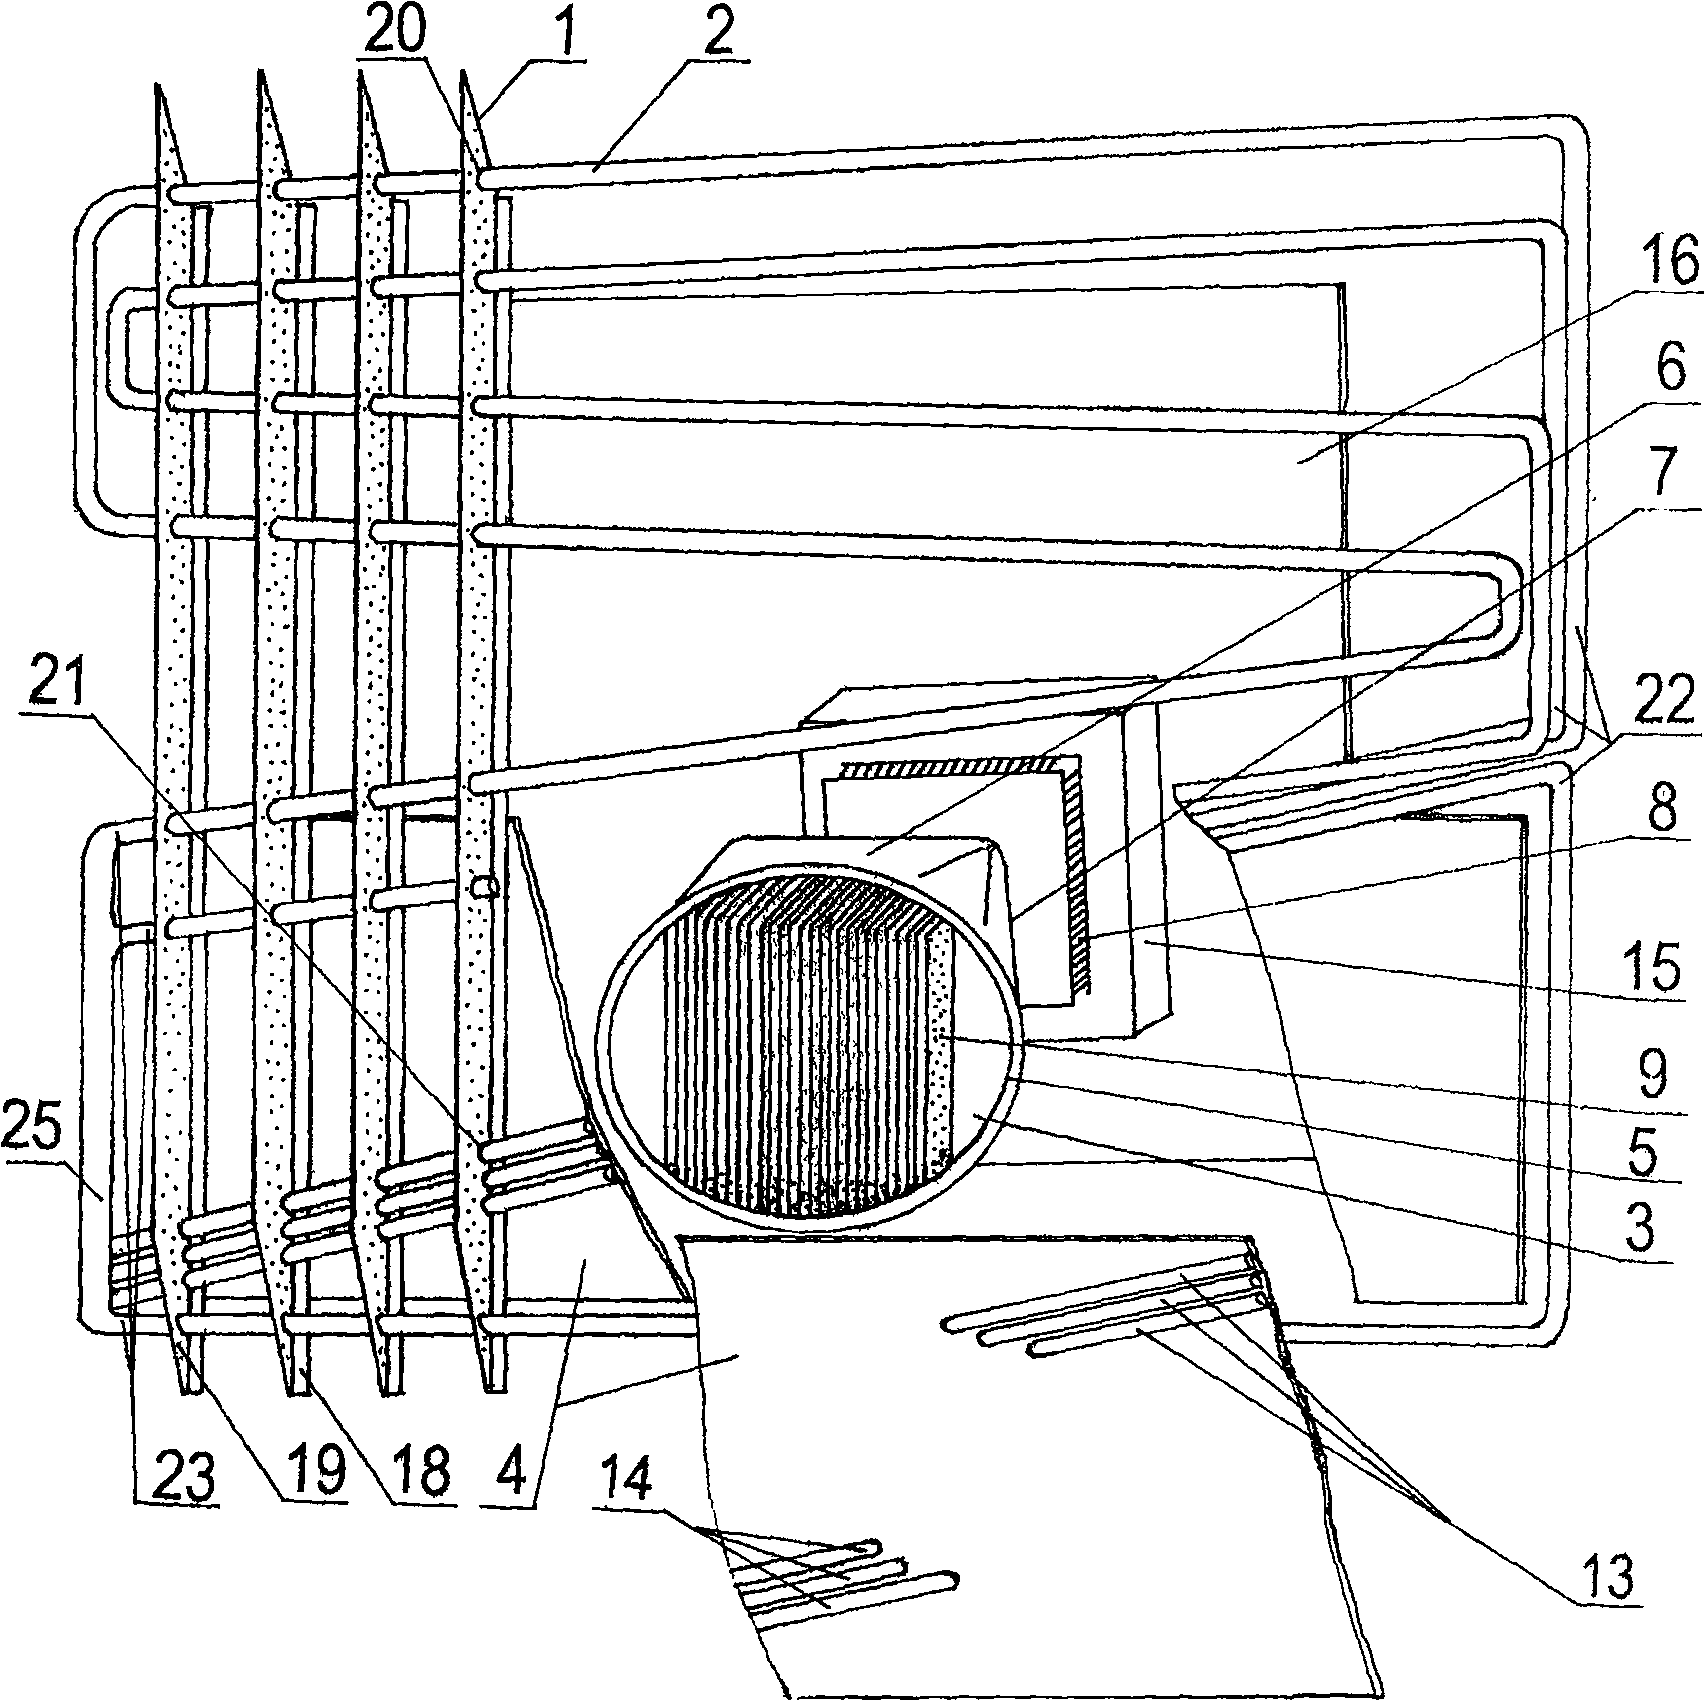 Four-element heat radiator